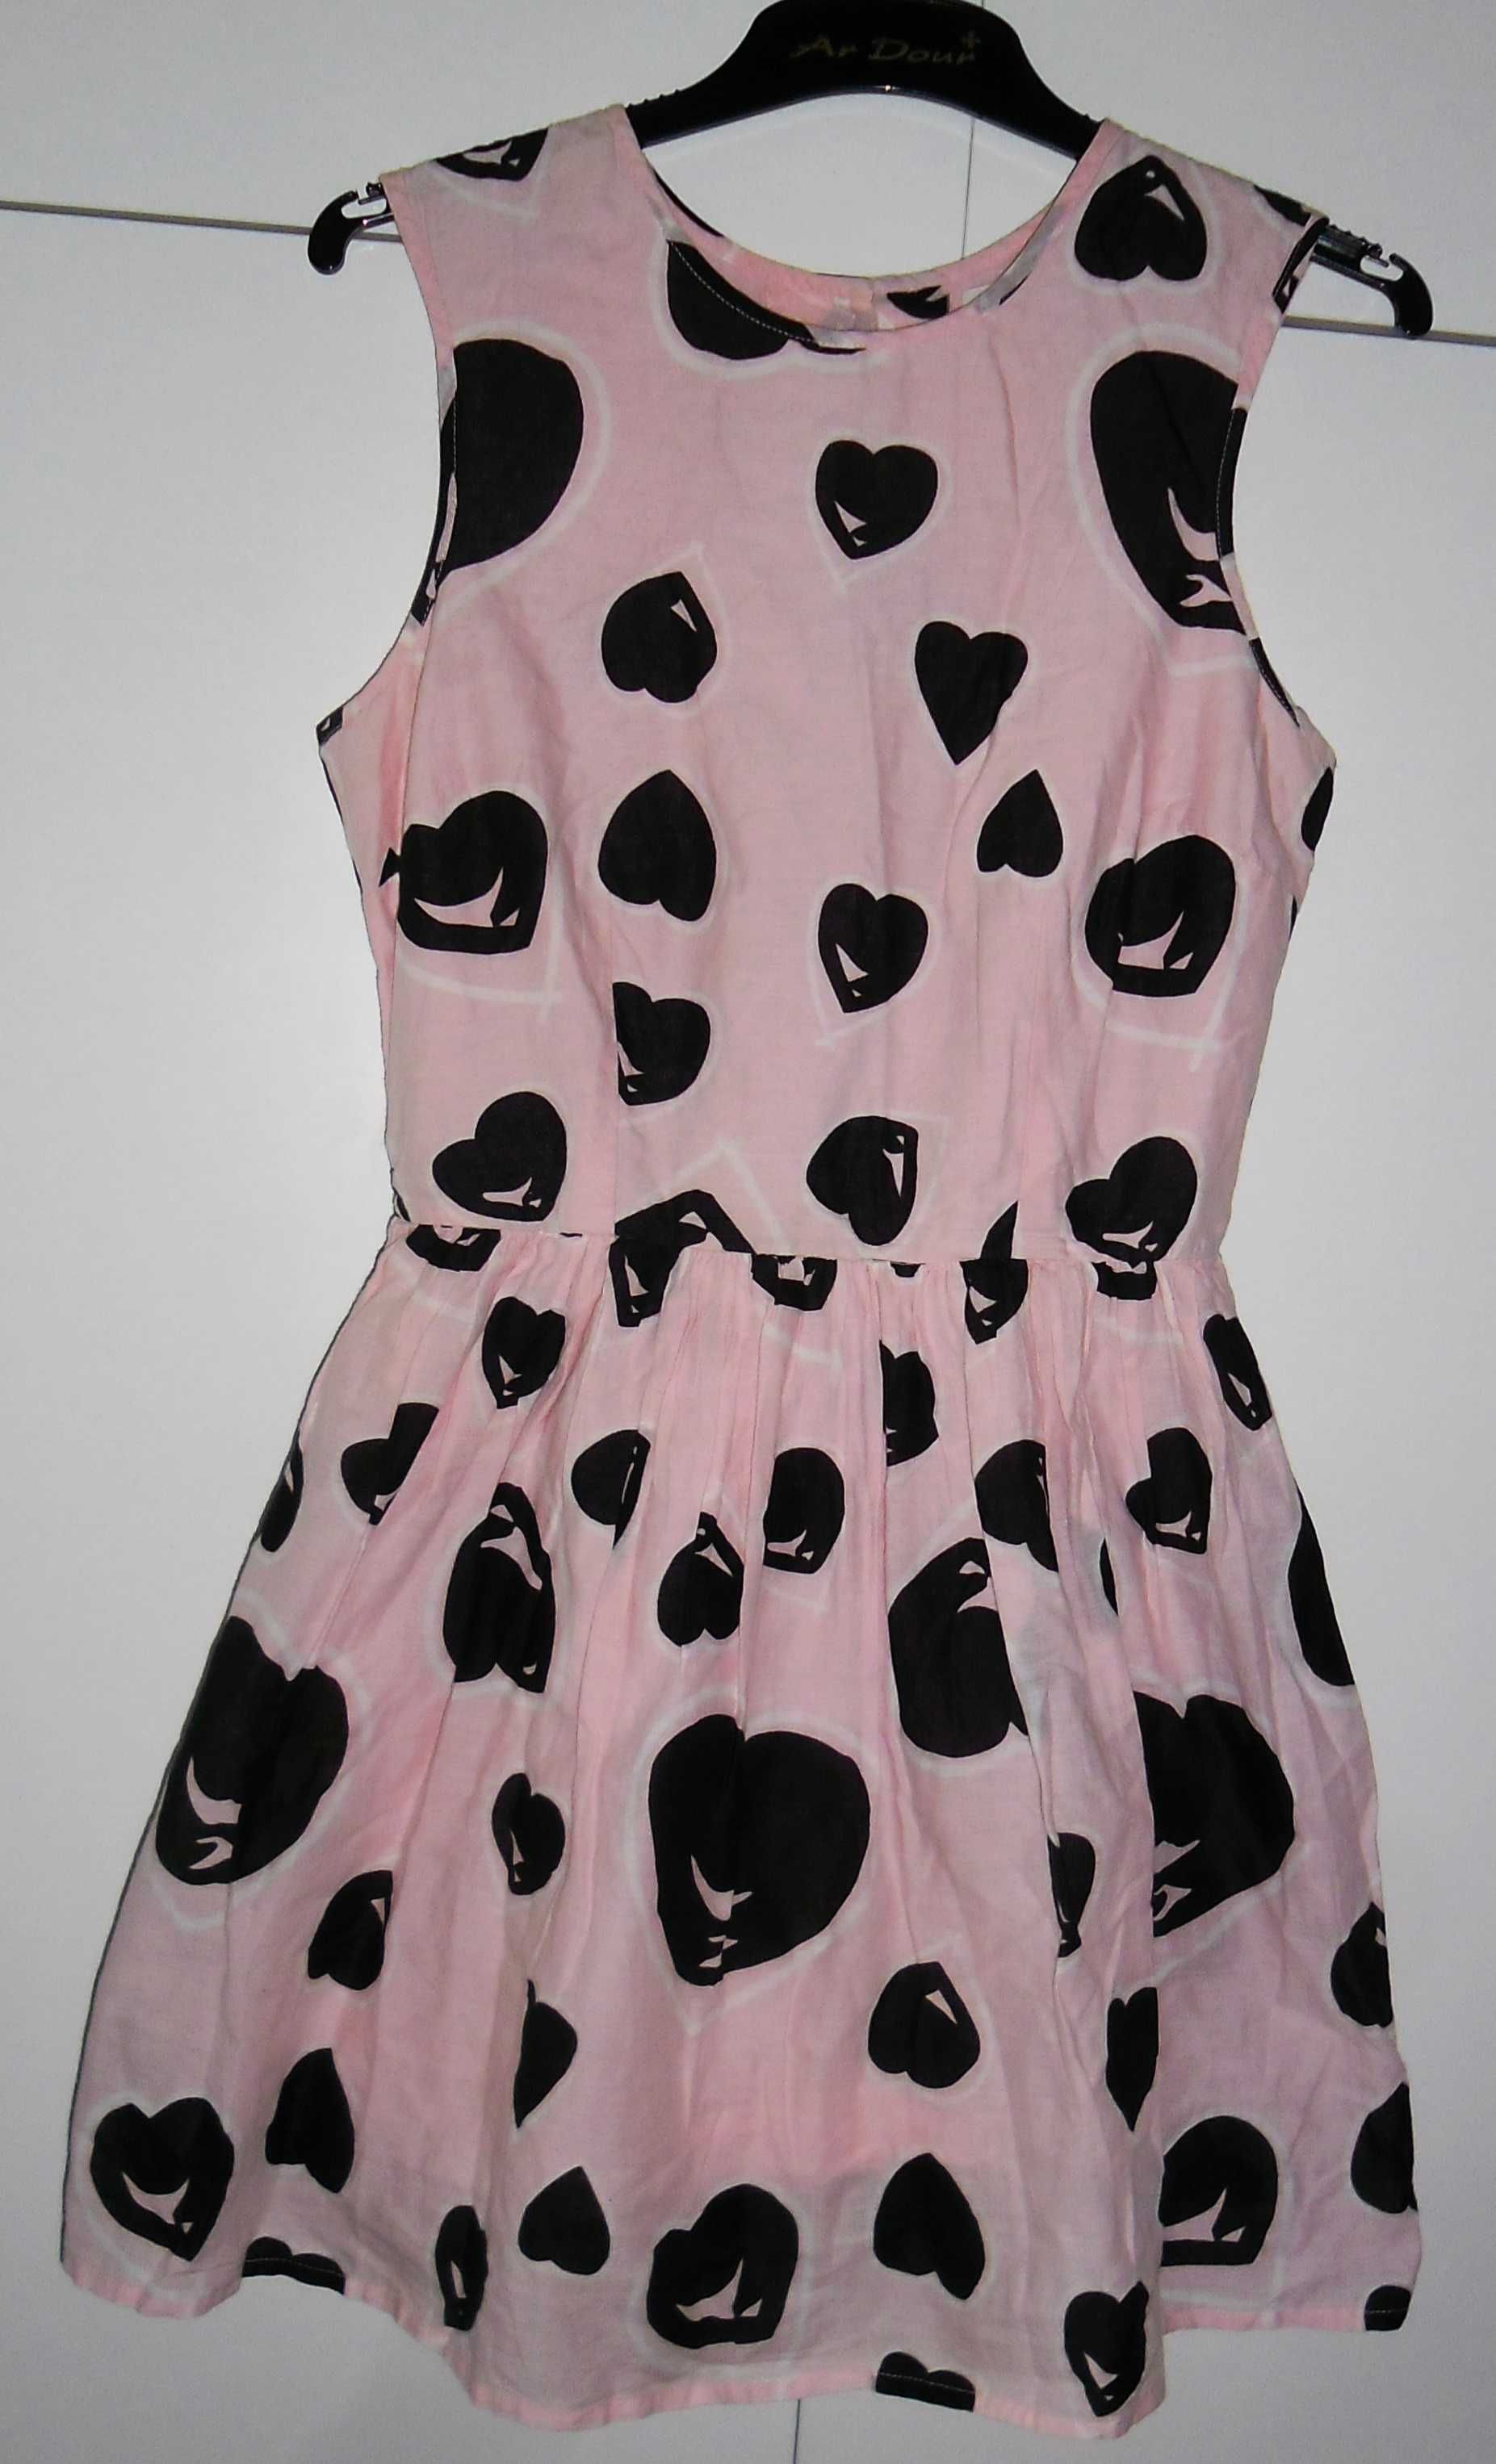 Sukienka River Island różowa serca 38 M czarne serduszka